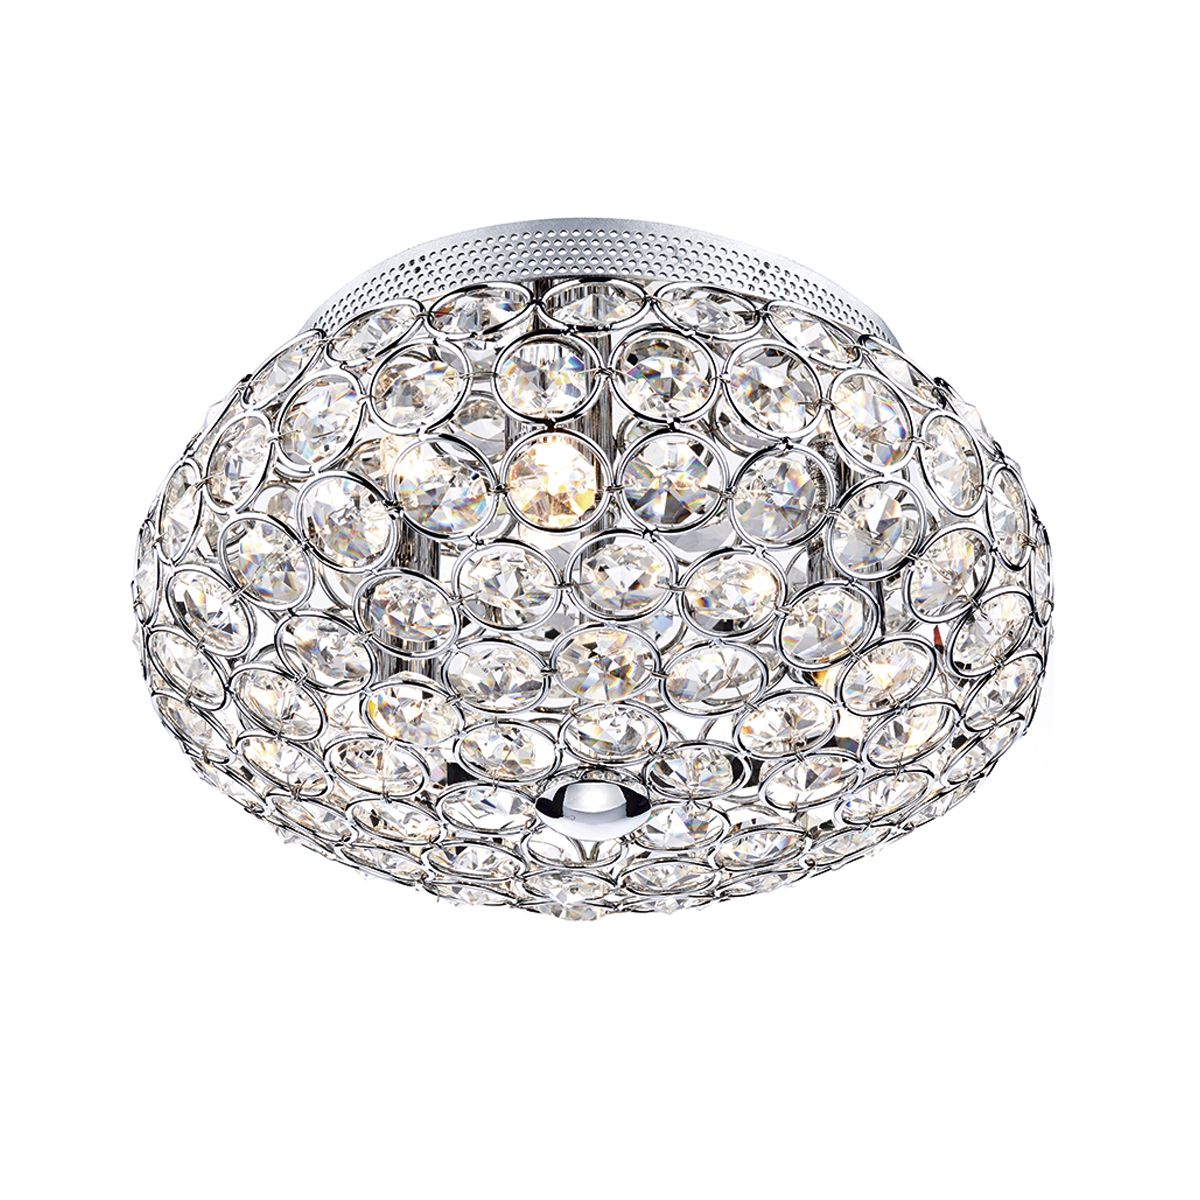 Dar Frost Small 3 Lamp Flush Crystal Ceiling Light Chrome